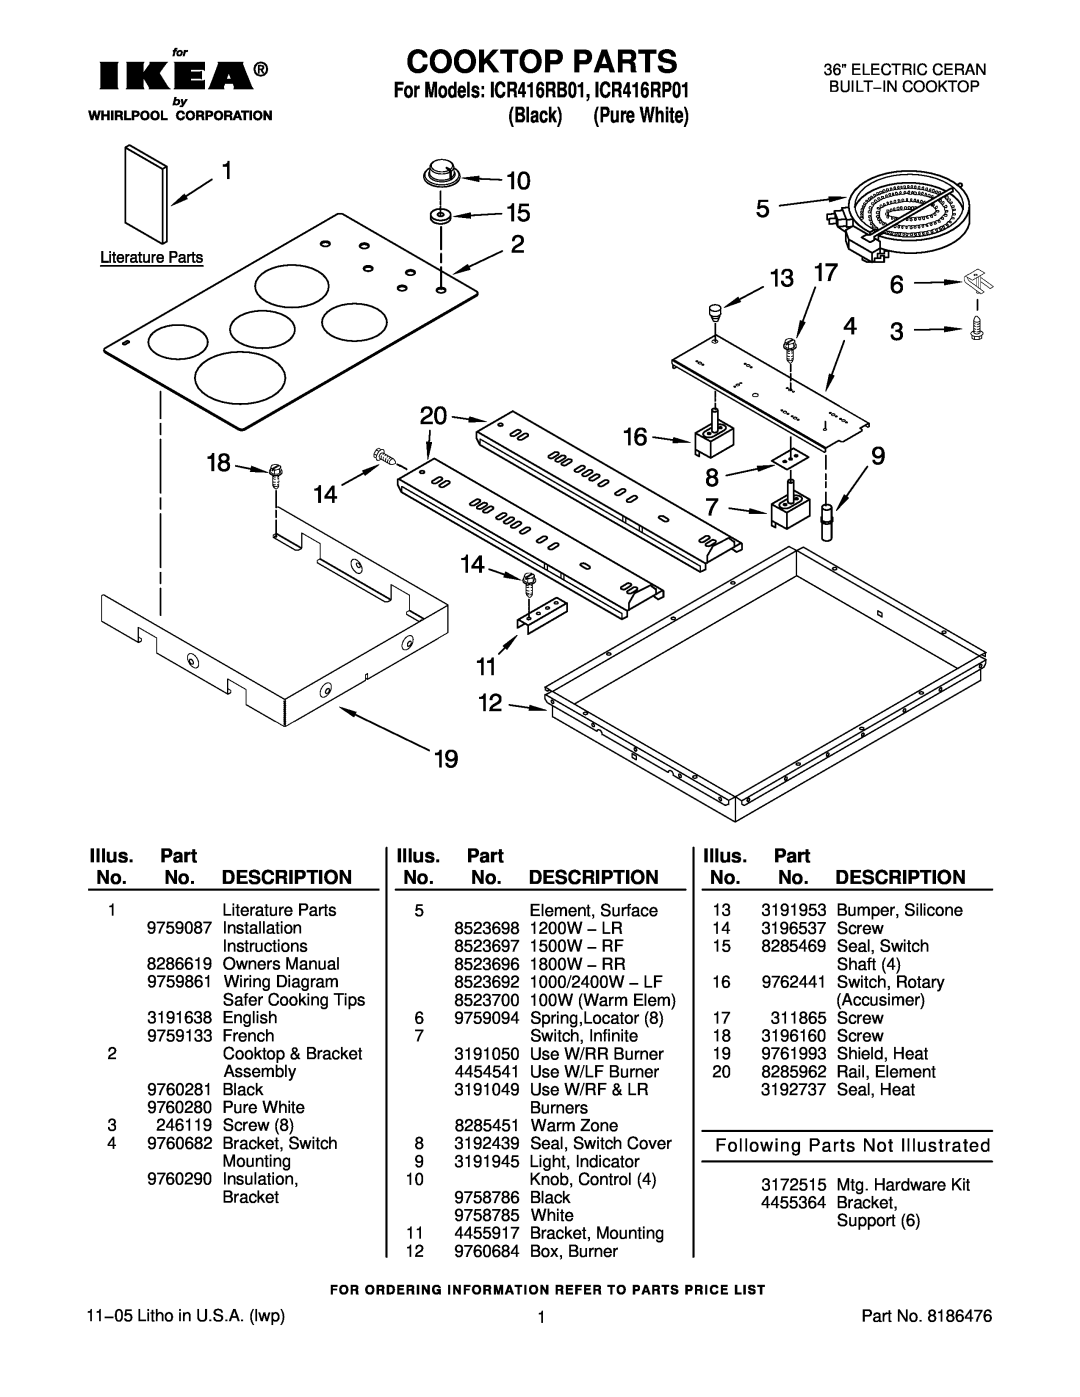 IKEA installation instructions Cooktop Parts, For Models ICR416RB01, ICR416RP01, Black, Illus. Part No. No. DESCRIPTION 